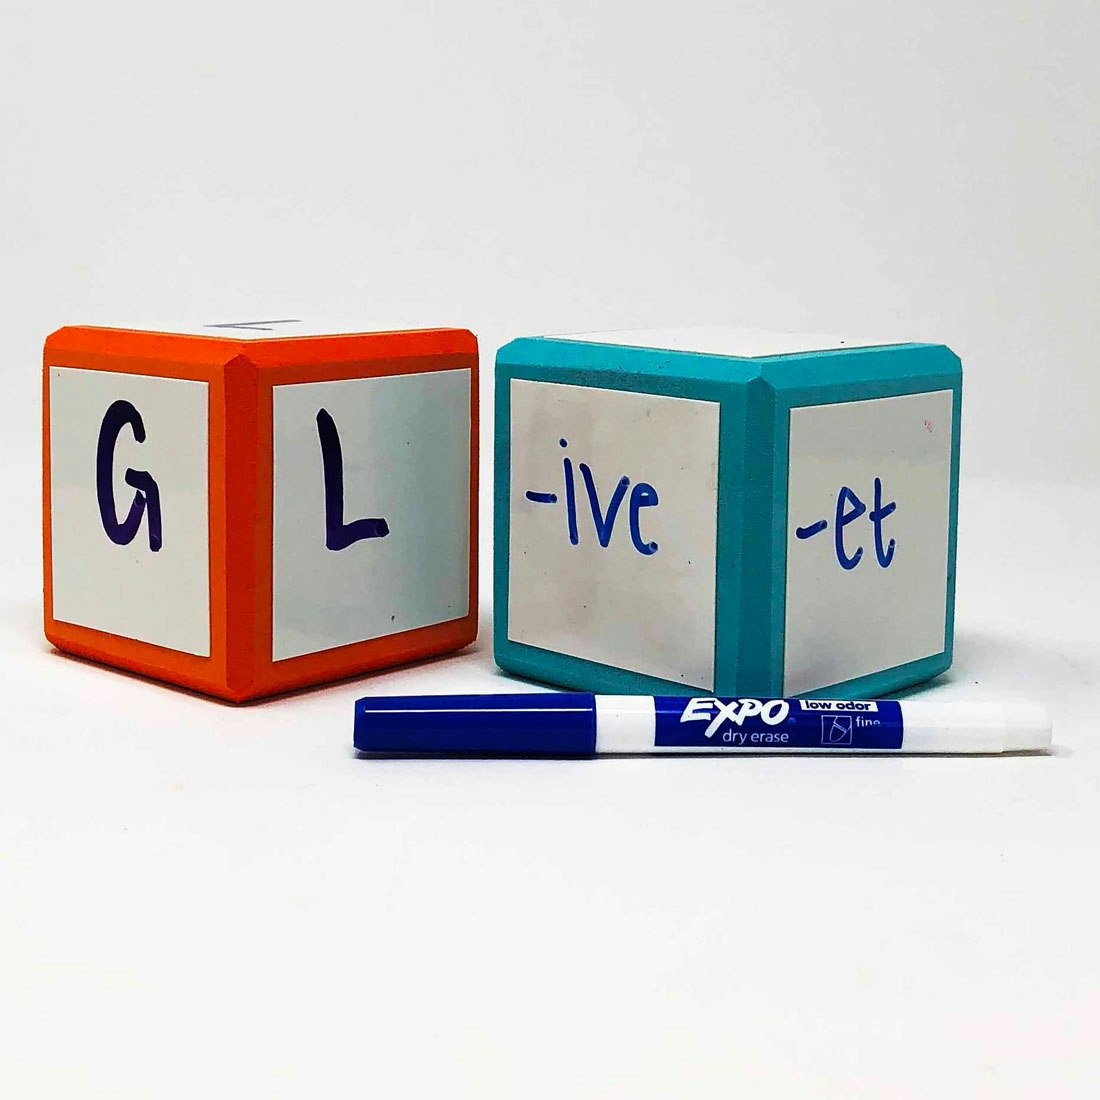 vocabulary-dice-written-in-fine-expo-marker.jpg